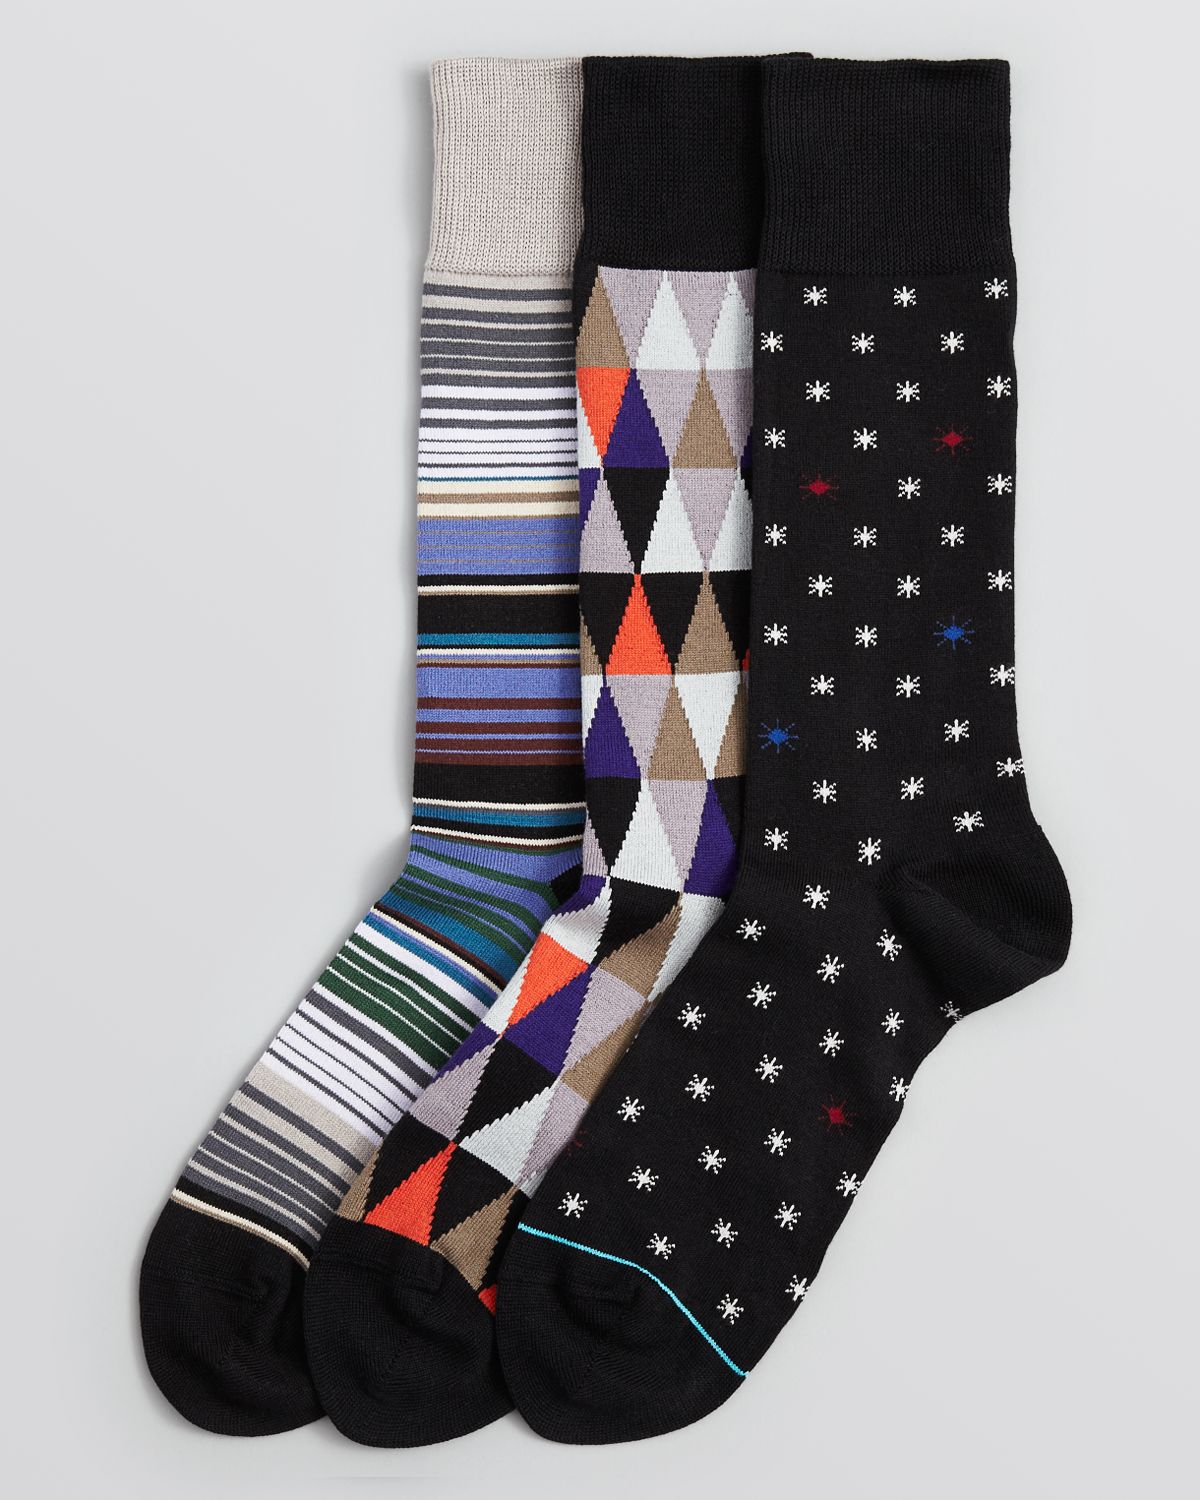 Lyst - Paul smith Printed Socks Pack Of 3 for Men